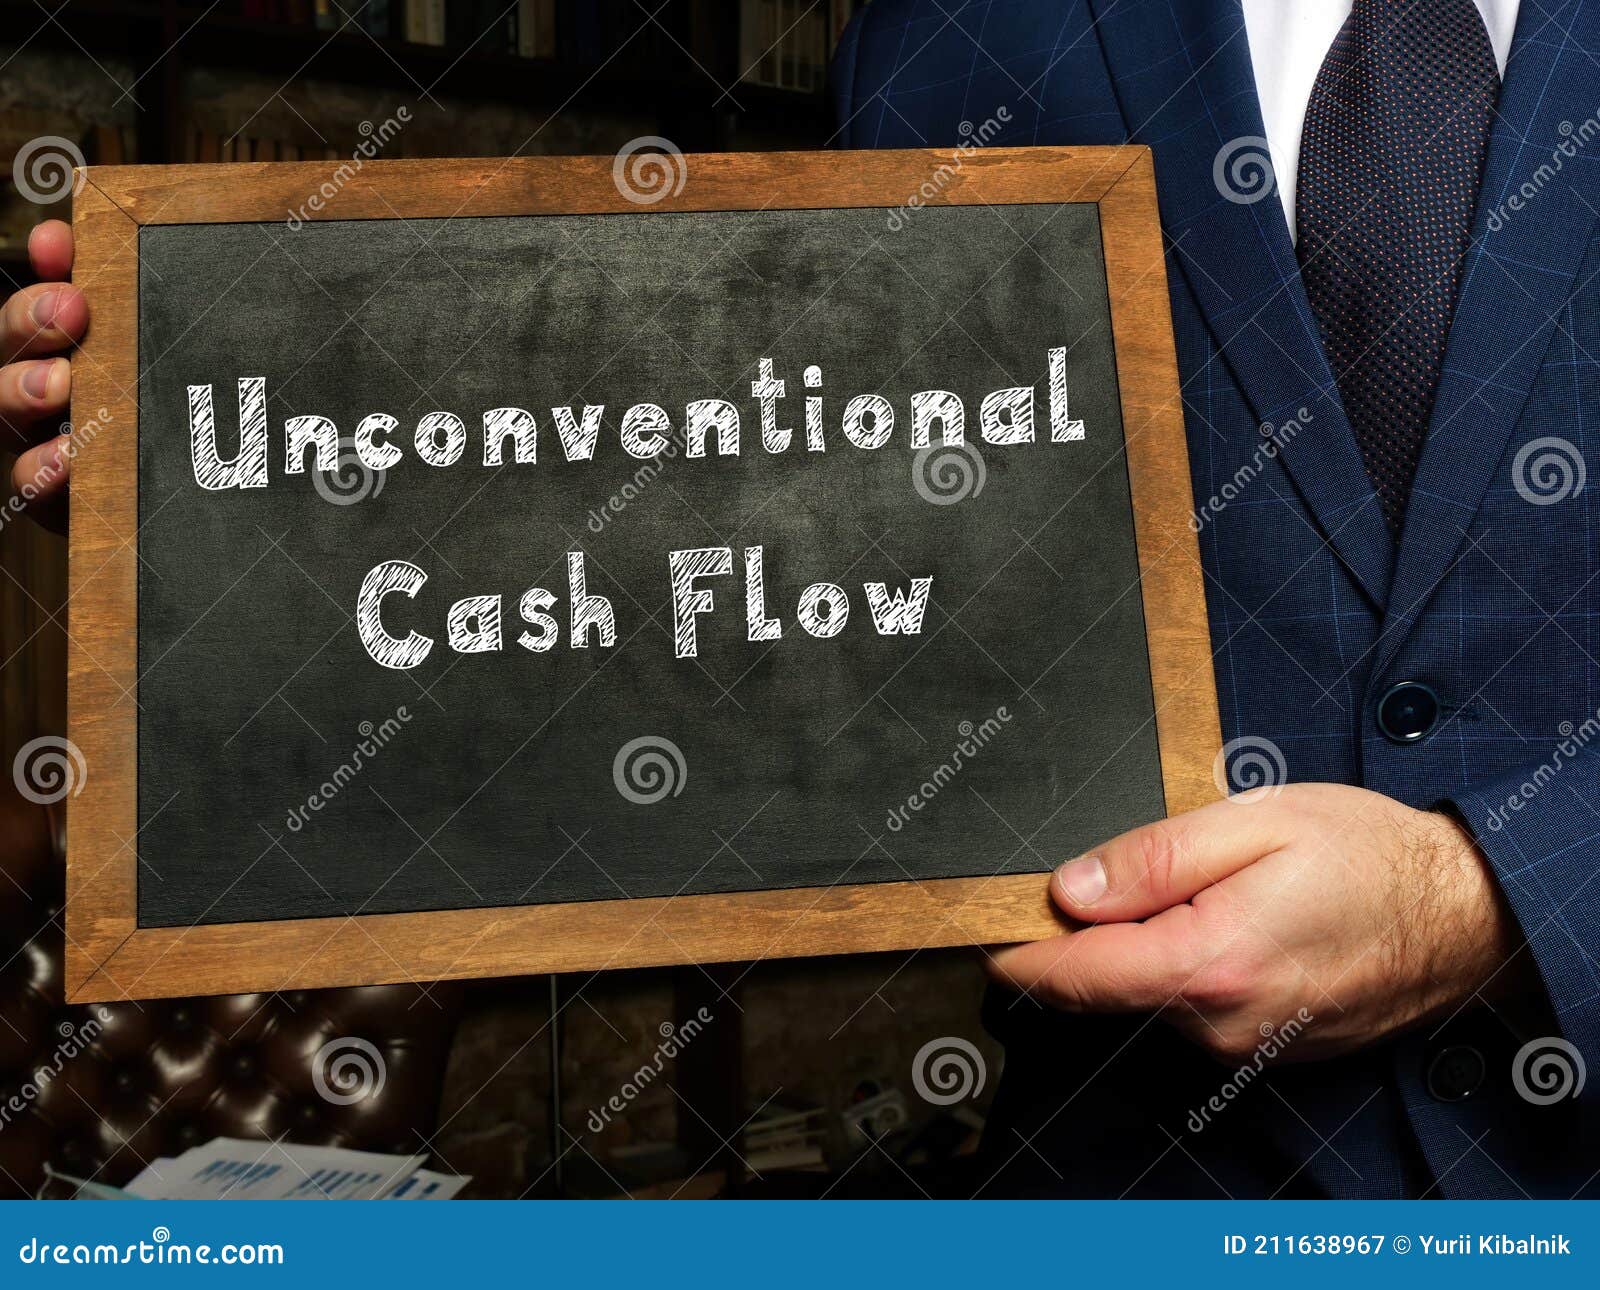 unconventional cash flow inscription on the black chalkboard